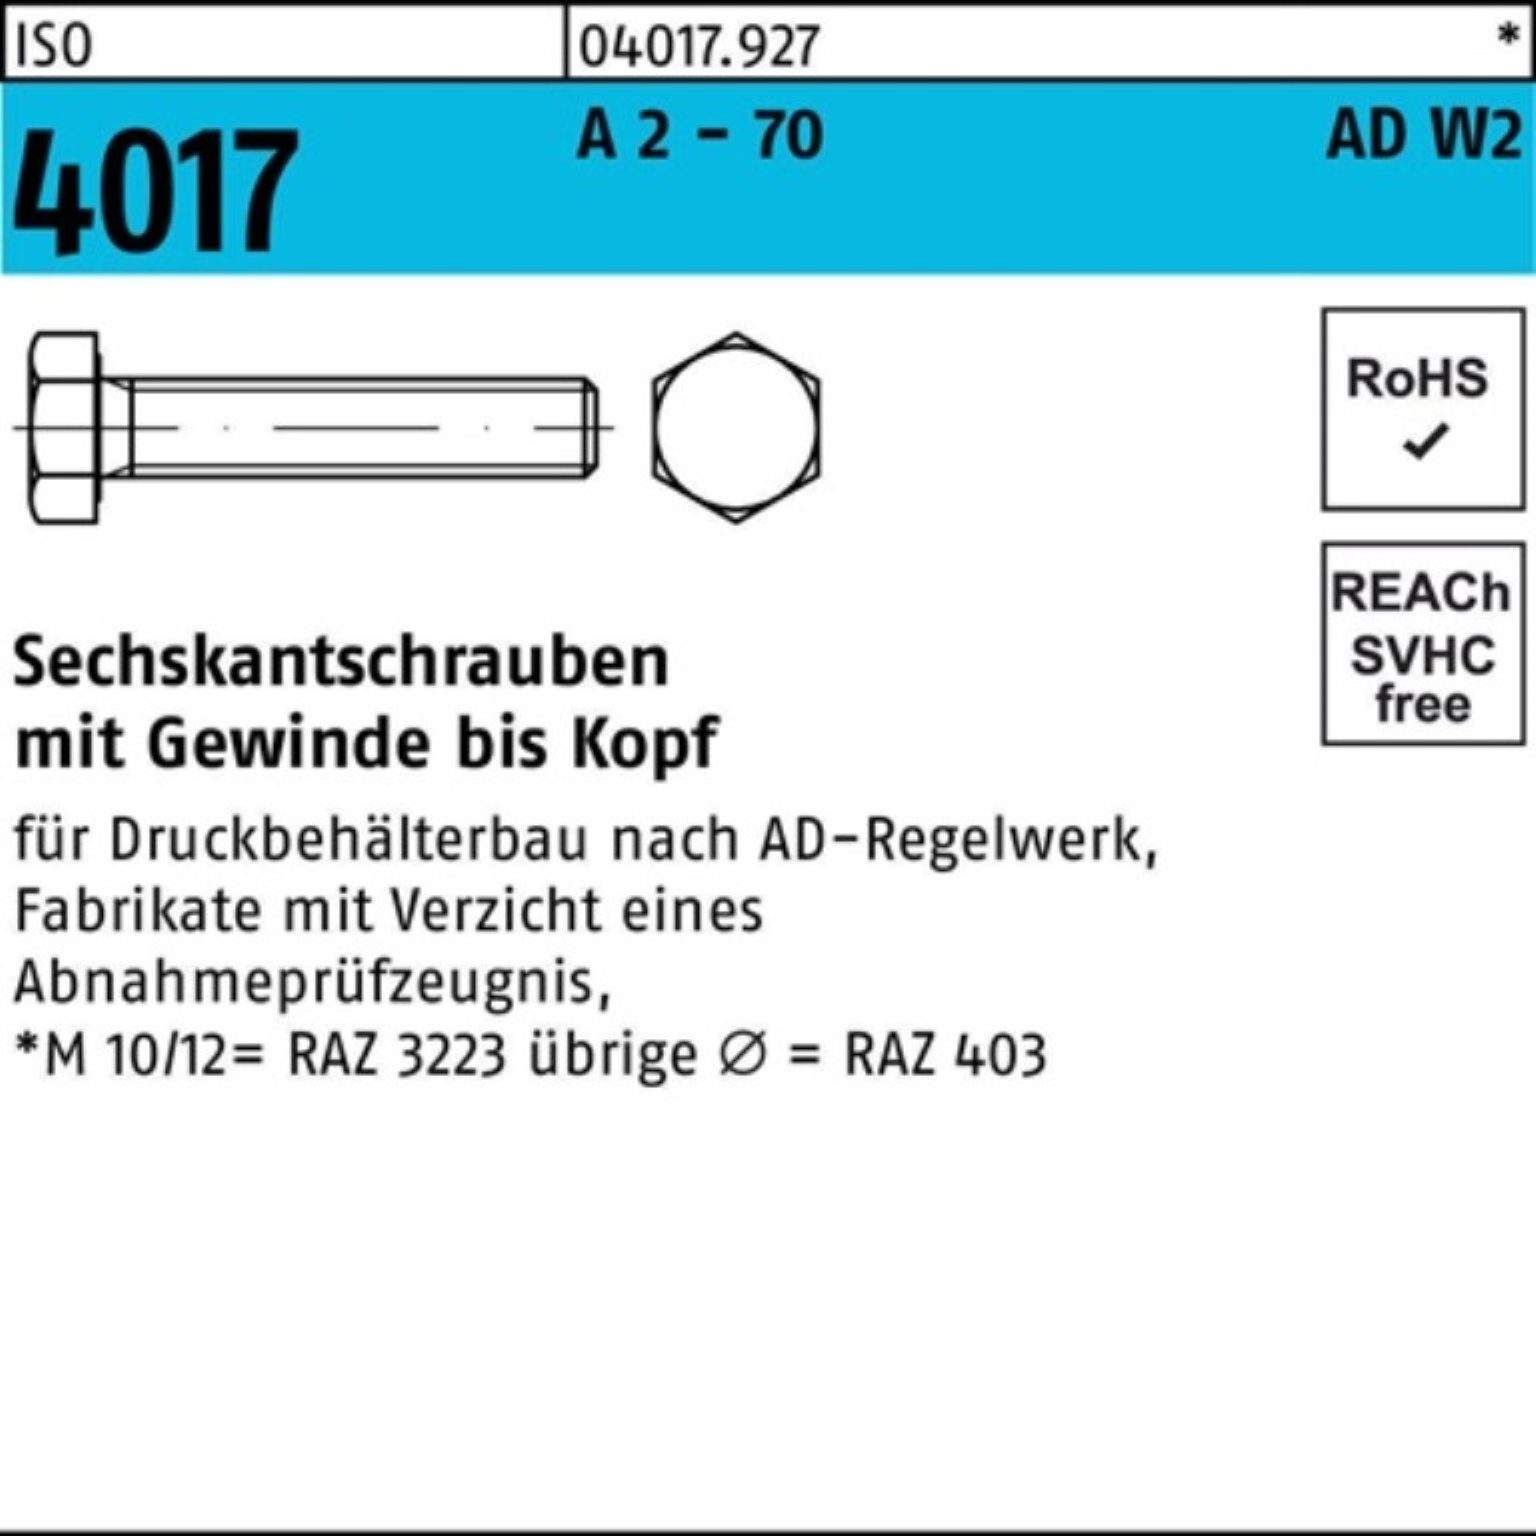 Bufab Sechskantschraube 100er Pack Sechskantschraube ISO 4017 VG M20x 70 A 2 - 70 AD-W2 25 St